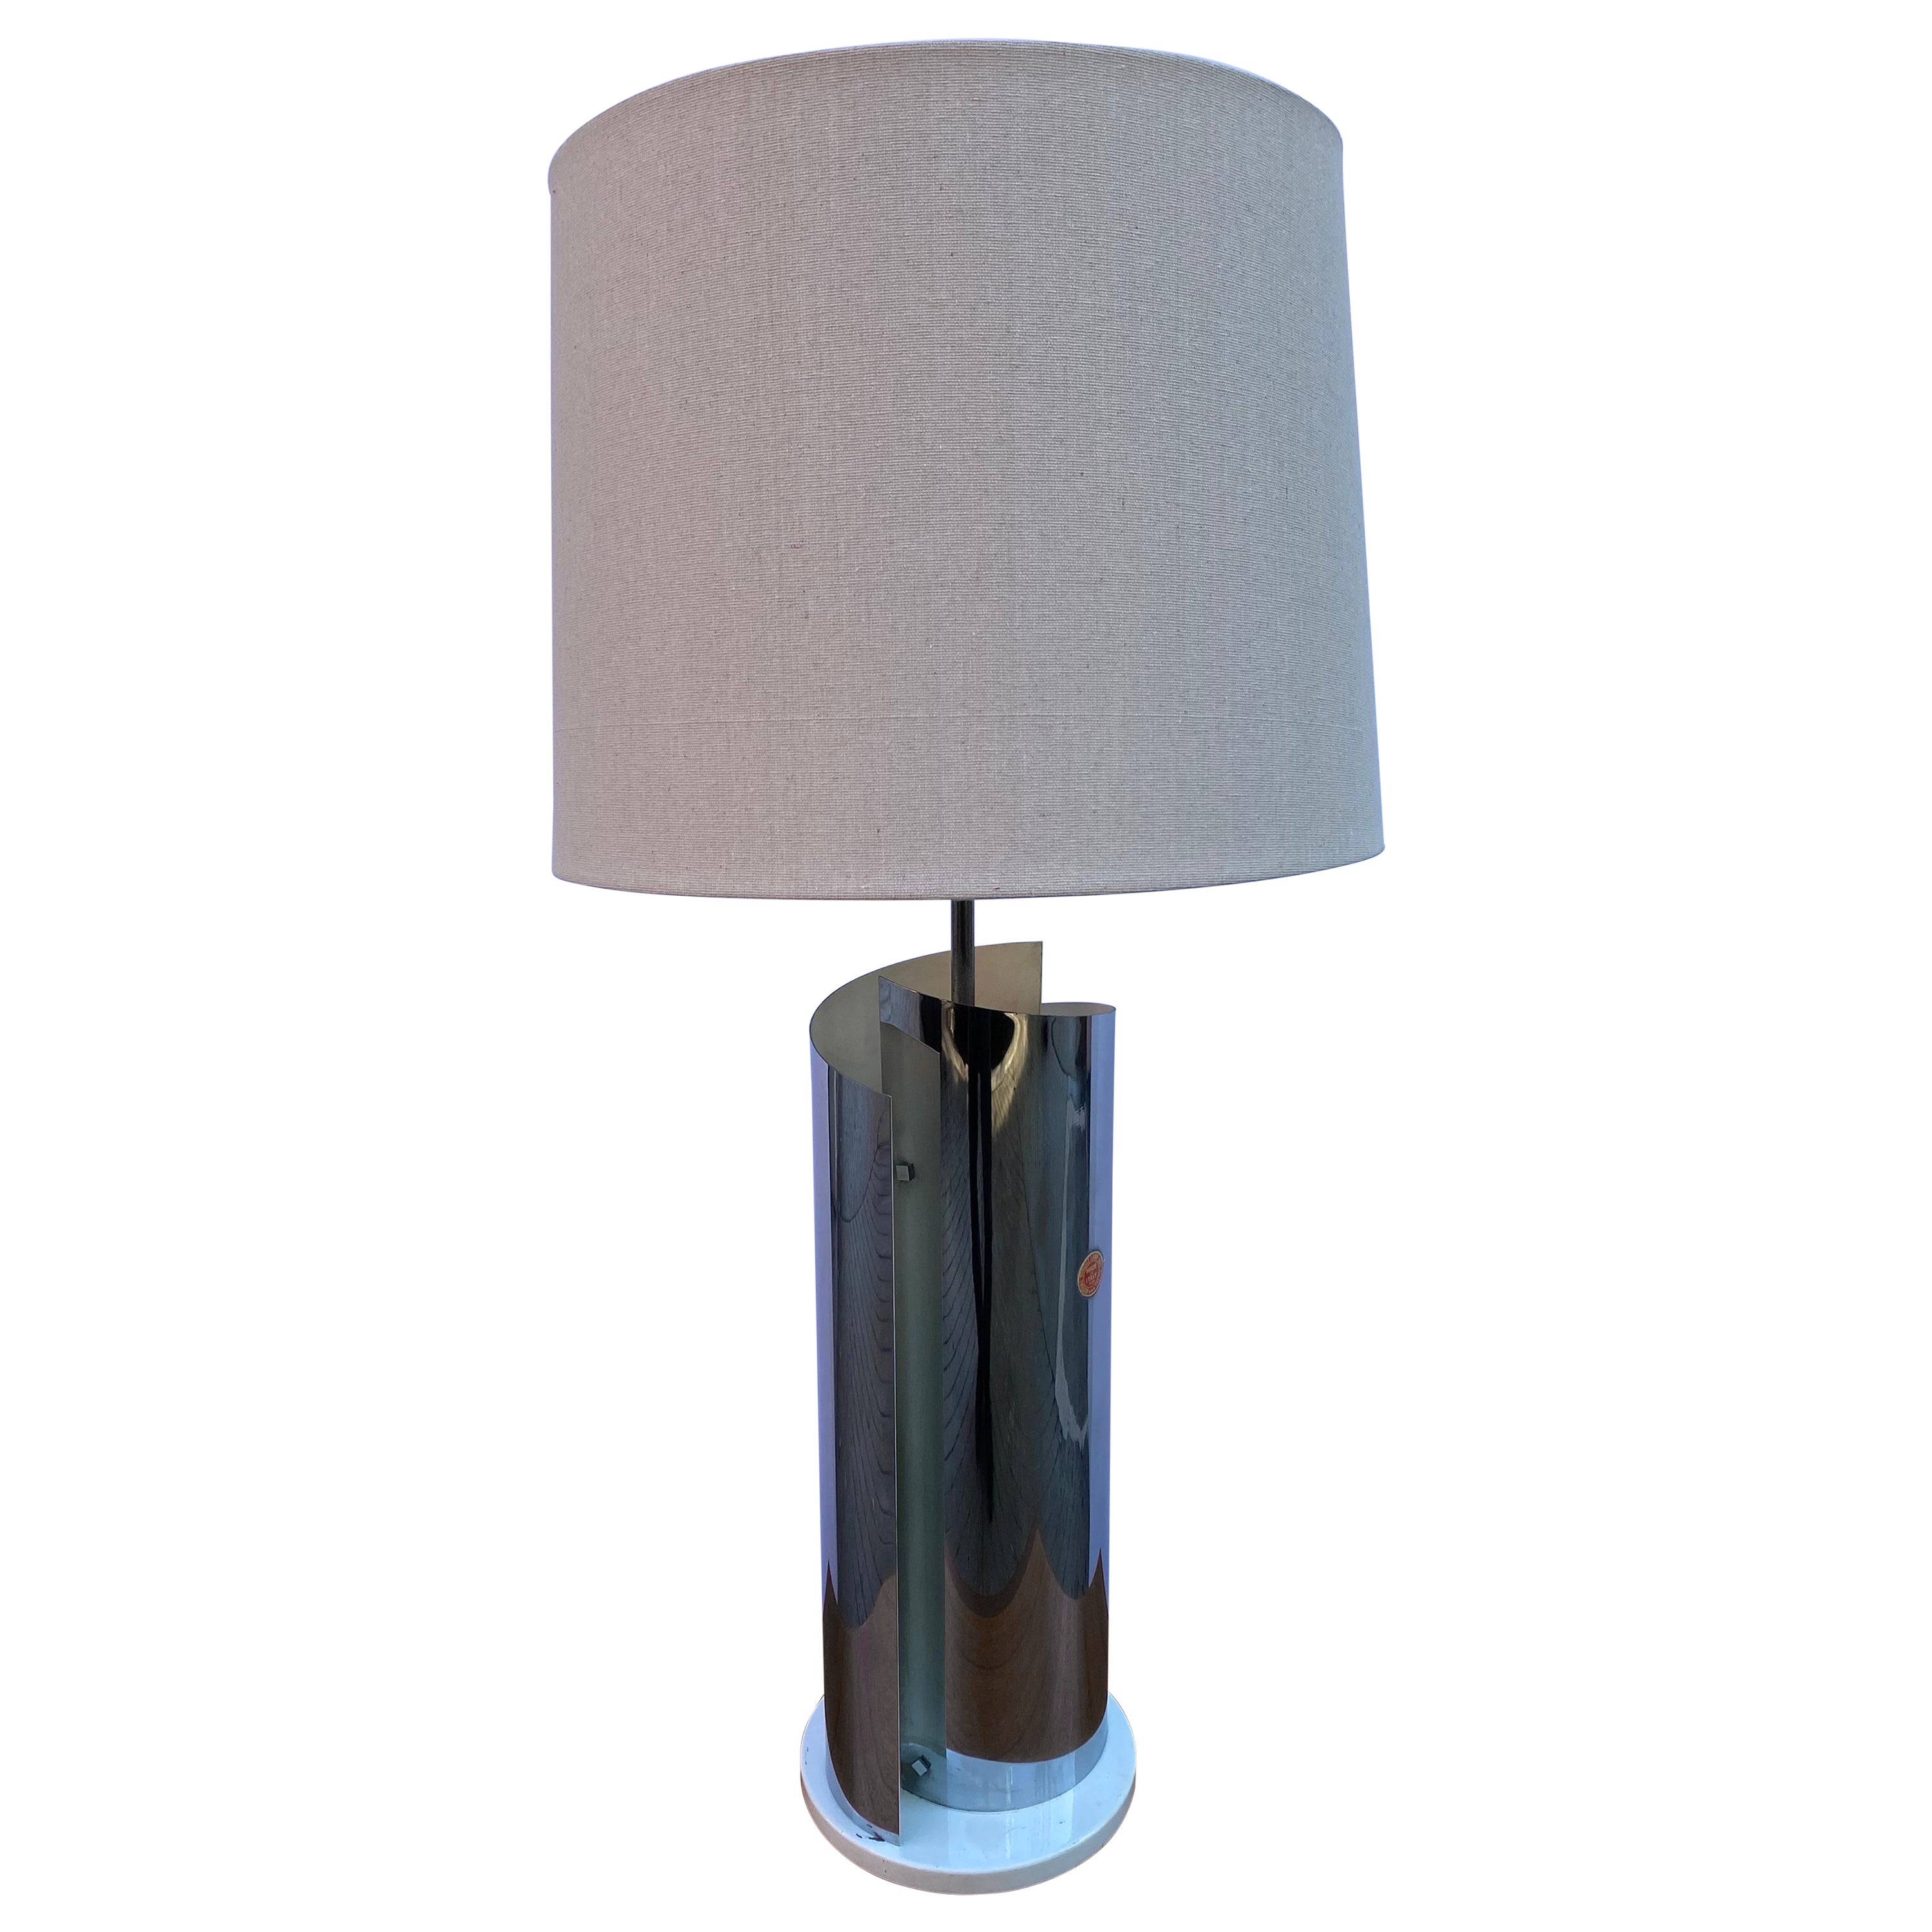 Italian Lamp for Mutual Sunset Lamp Company